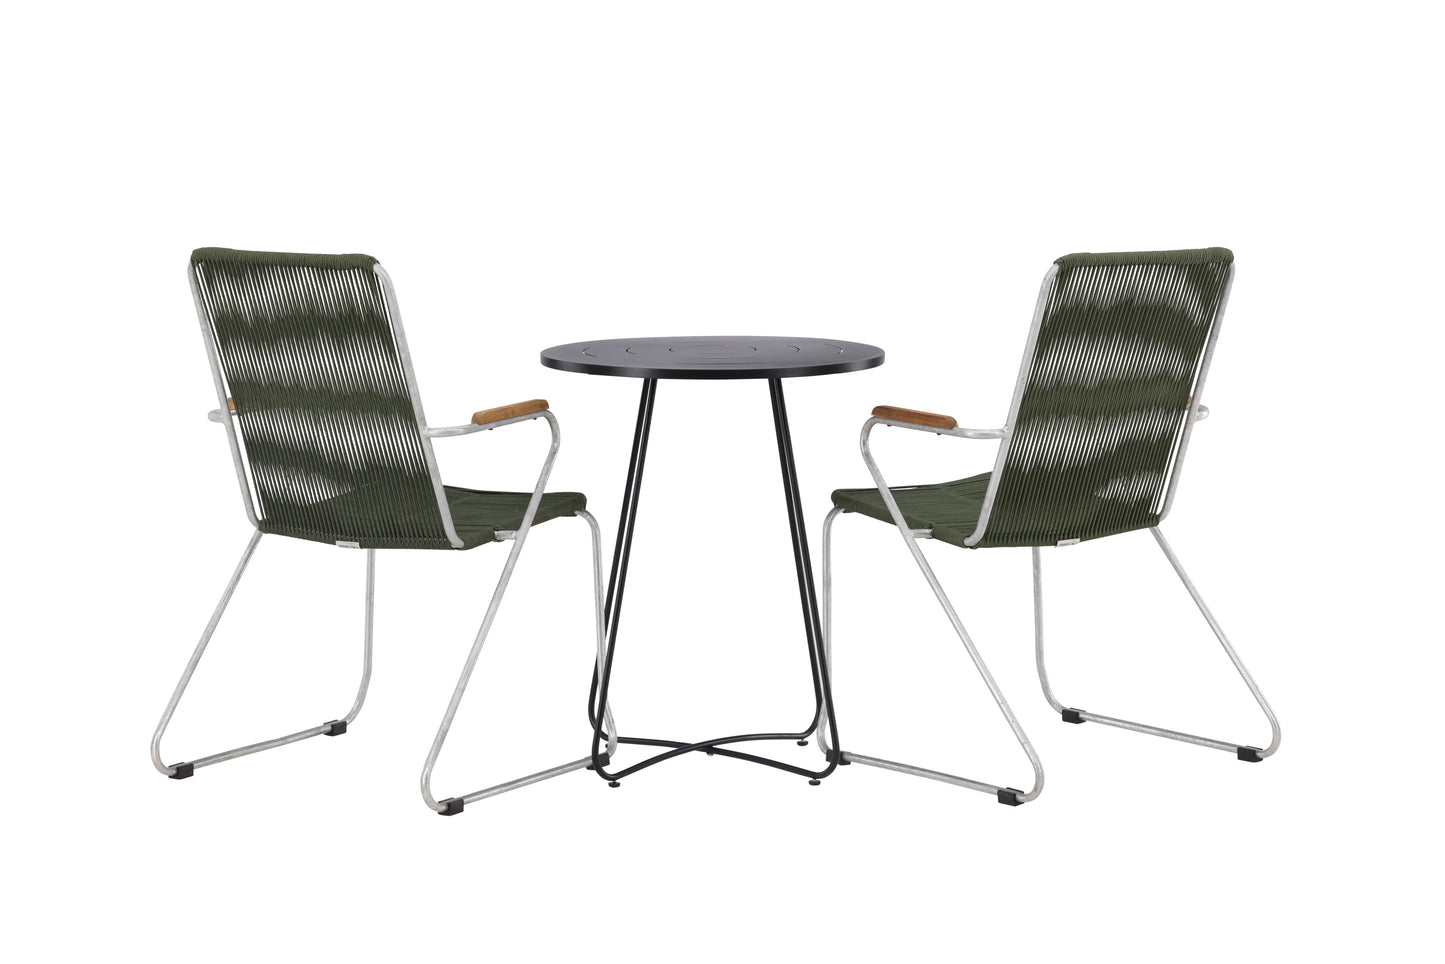 Bacong - Cafébord, Stål - Sort / Rundt ø60** +Bois stol Stål - Sølv / Grønt Reb